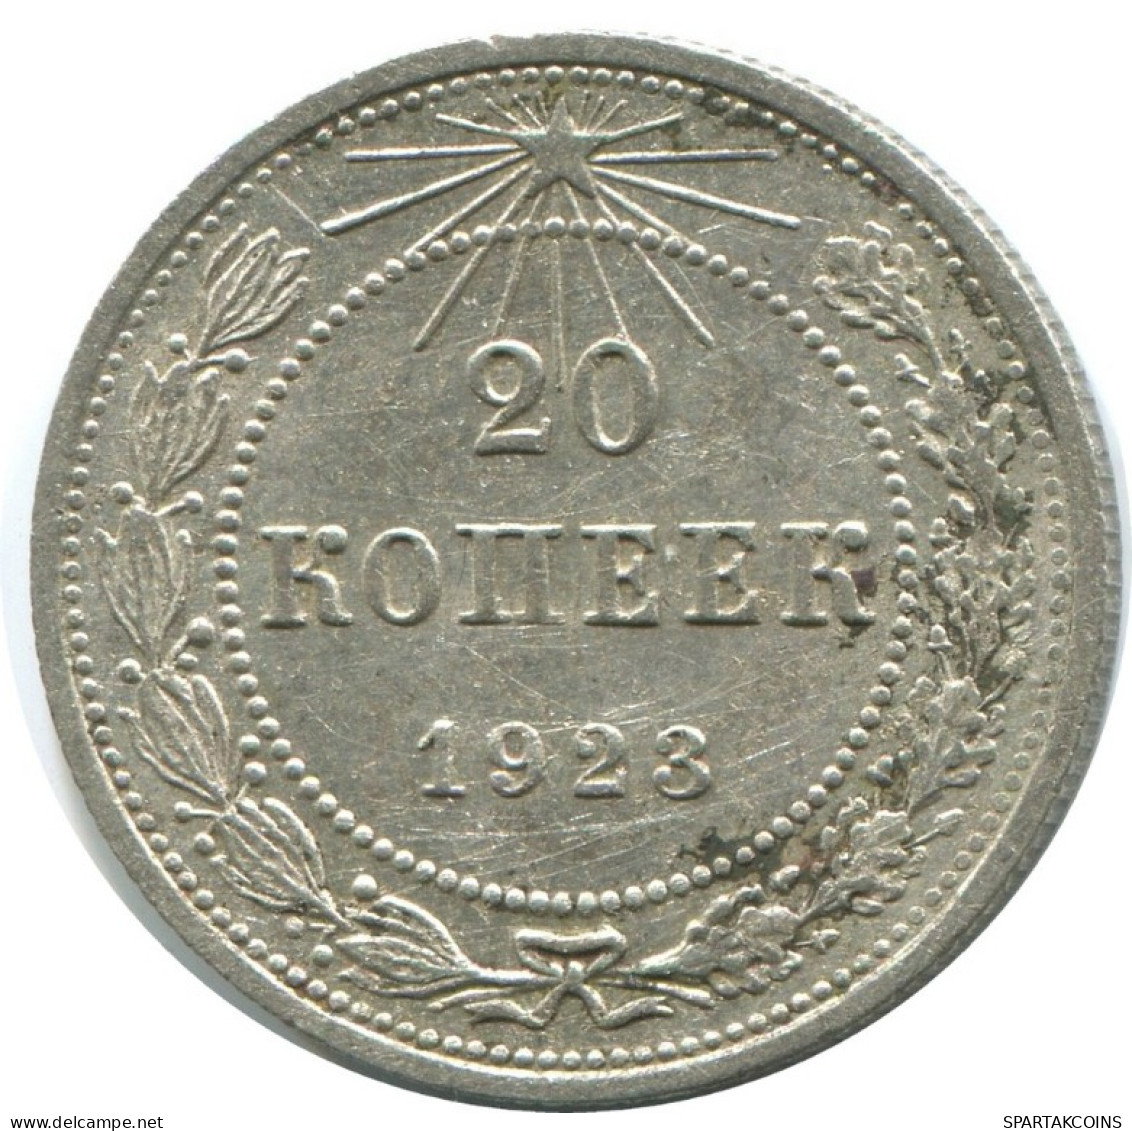 20 KOPEKS 1923 RUSSIA RSFSR SILVER Coin HIGH GRADE #AF608.U.A - Rusia